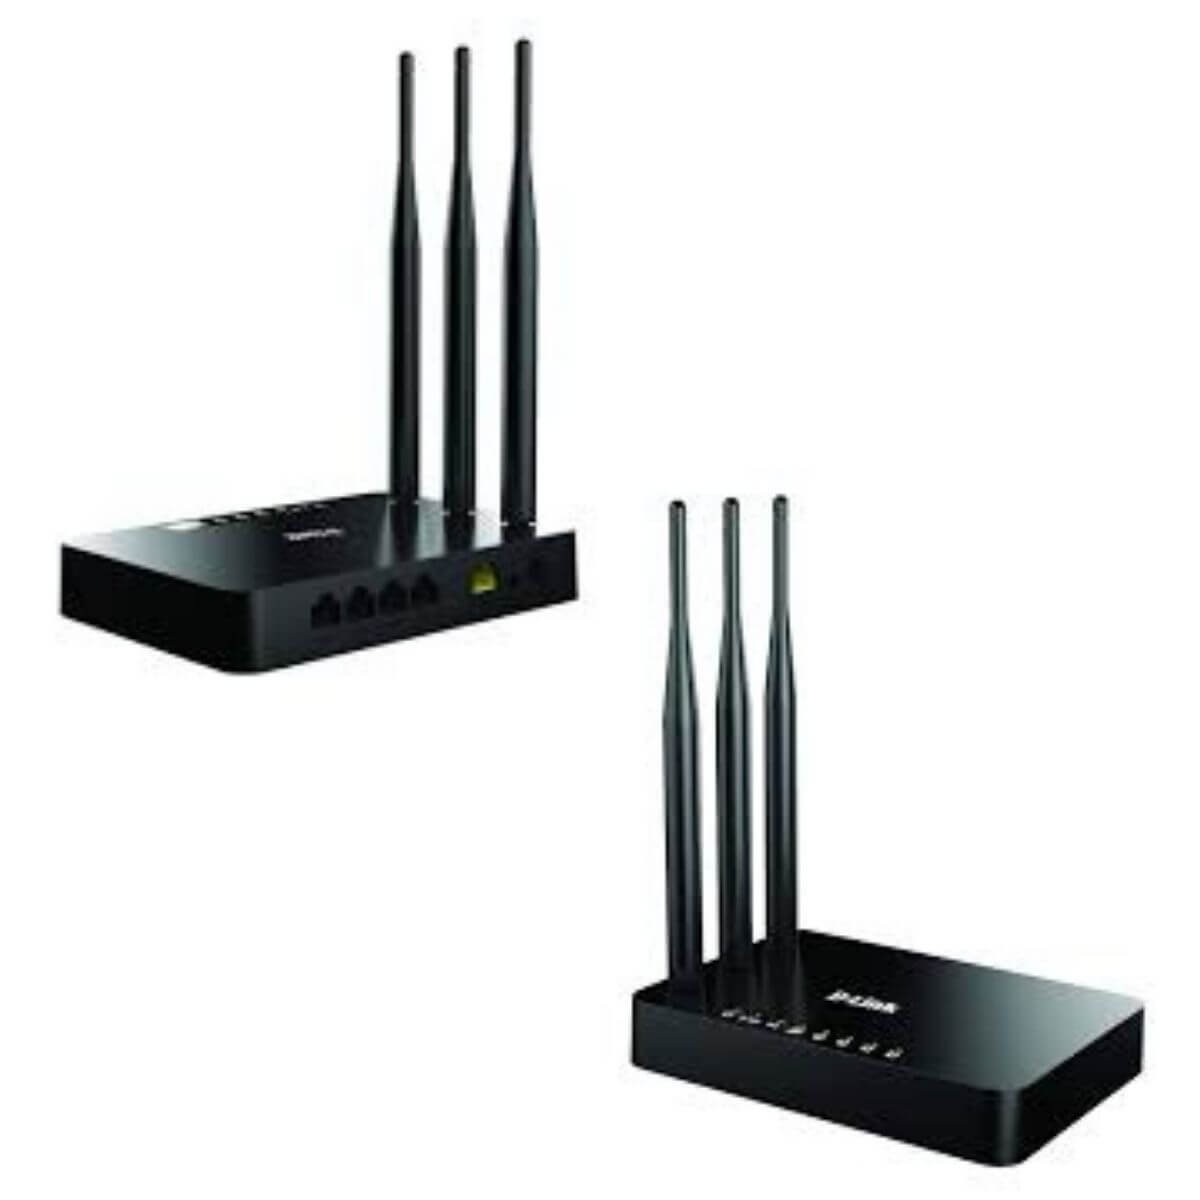 DLink DIR-806 IN AC750 Dual-Brand Wireless Router...... BD